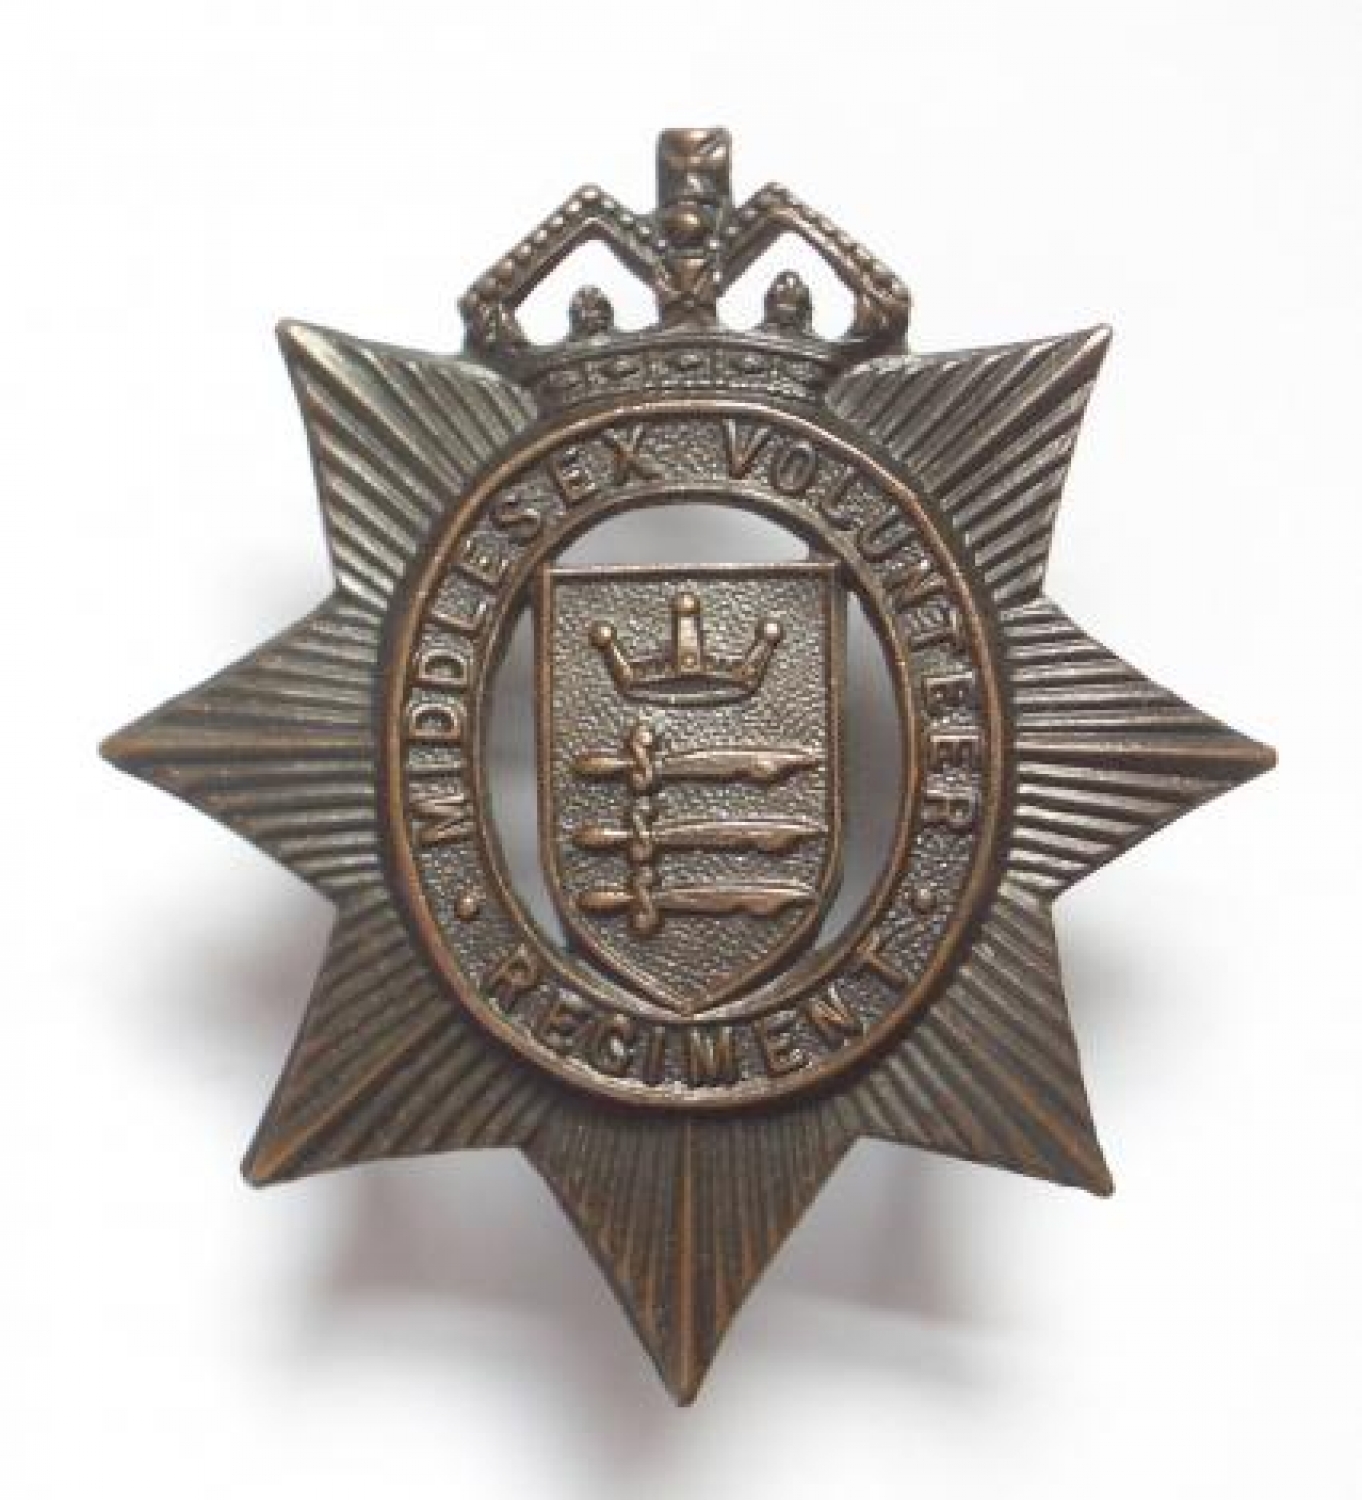 Middlesex Volunteer Regiment cap badge